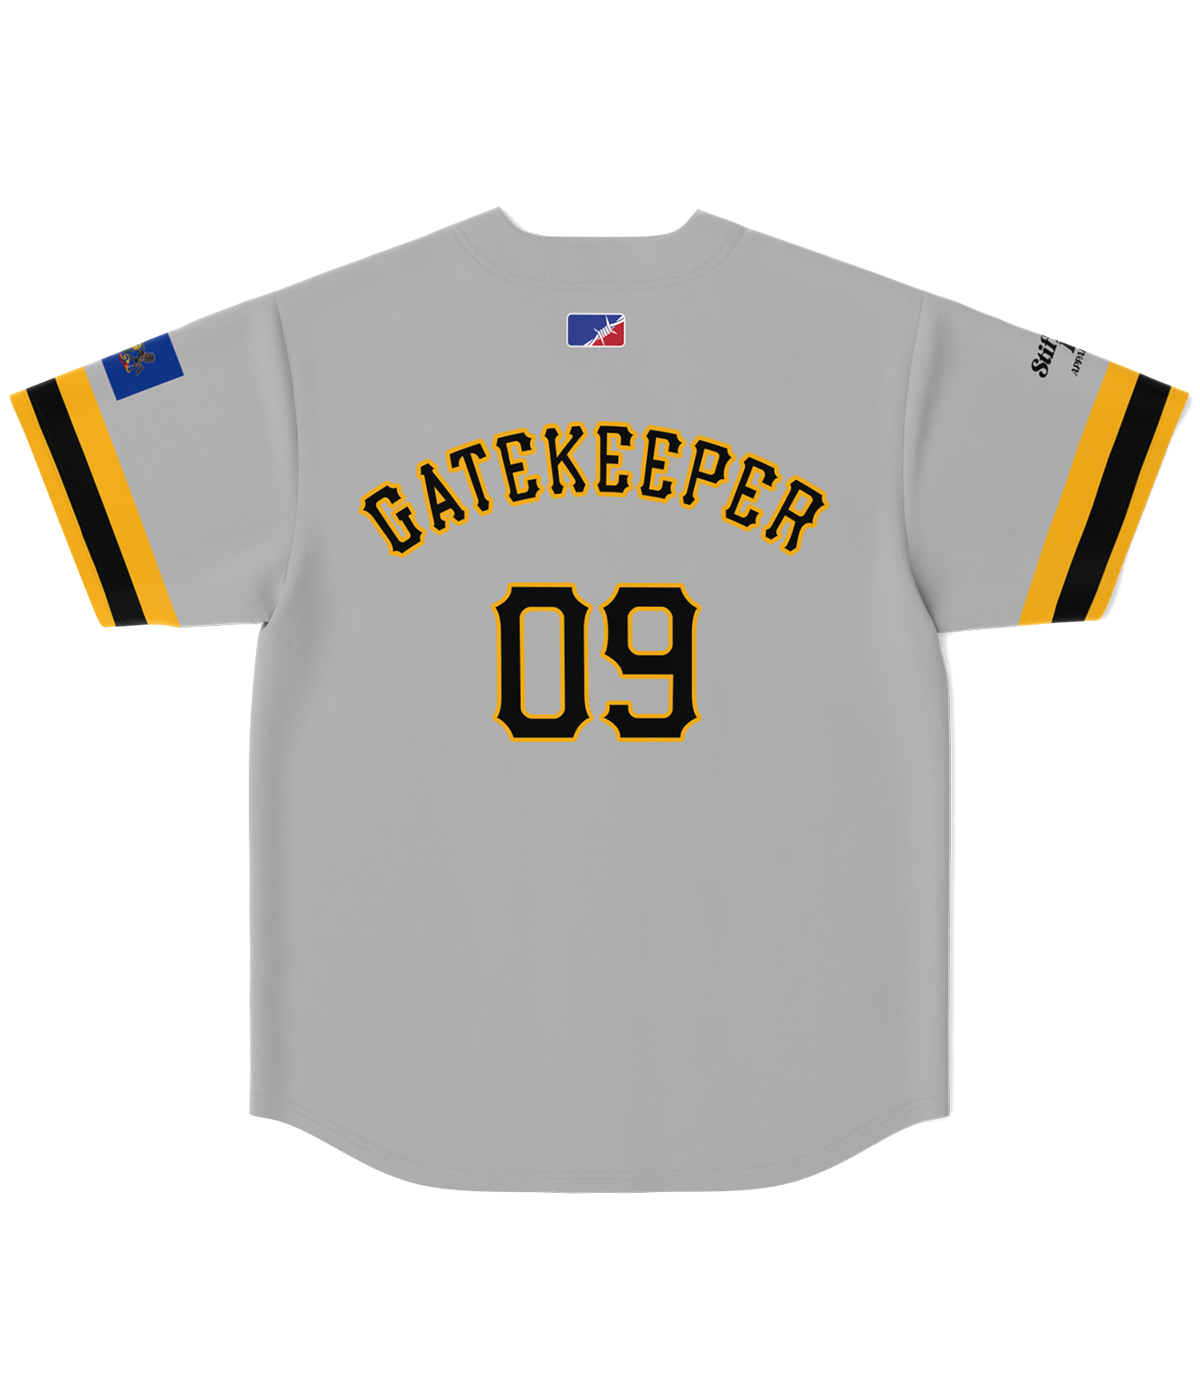 Tony Deppen - Baseball Jersey